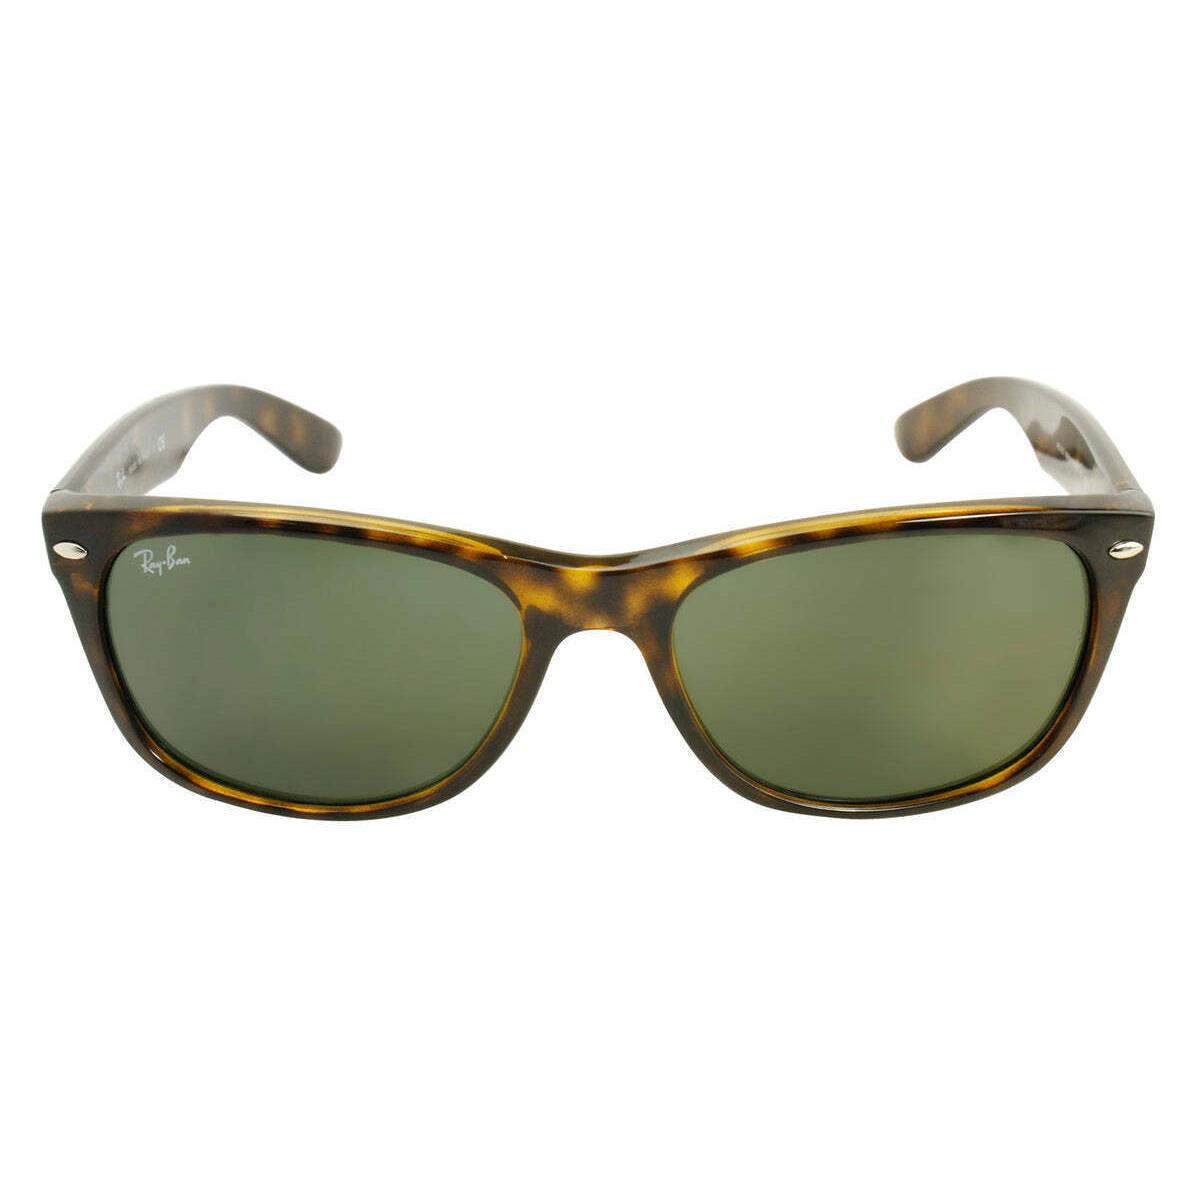 Ray-ban New Wayfarer Classic Wayfarer Classic Shinny Tortoise/green 52mm Sunglasses RB2132 902 52 - Frame: Multicolor, Lens: Green